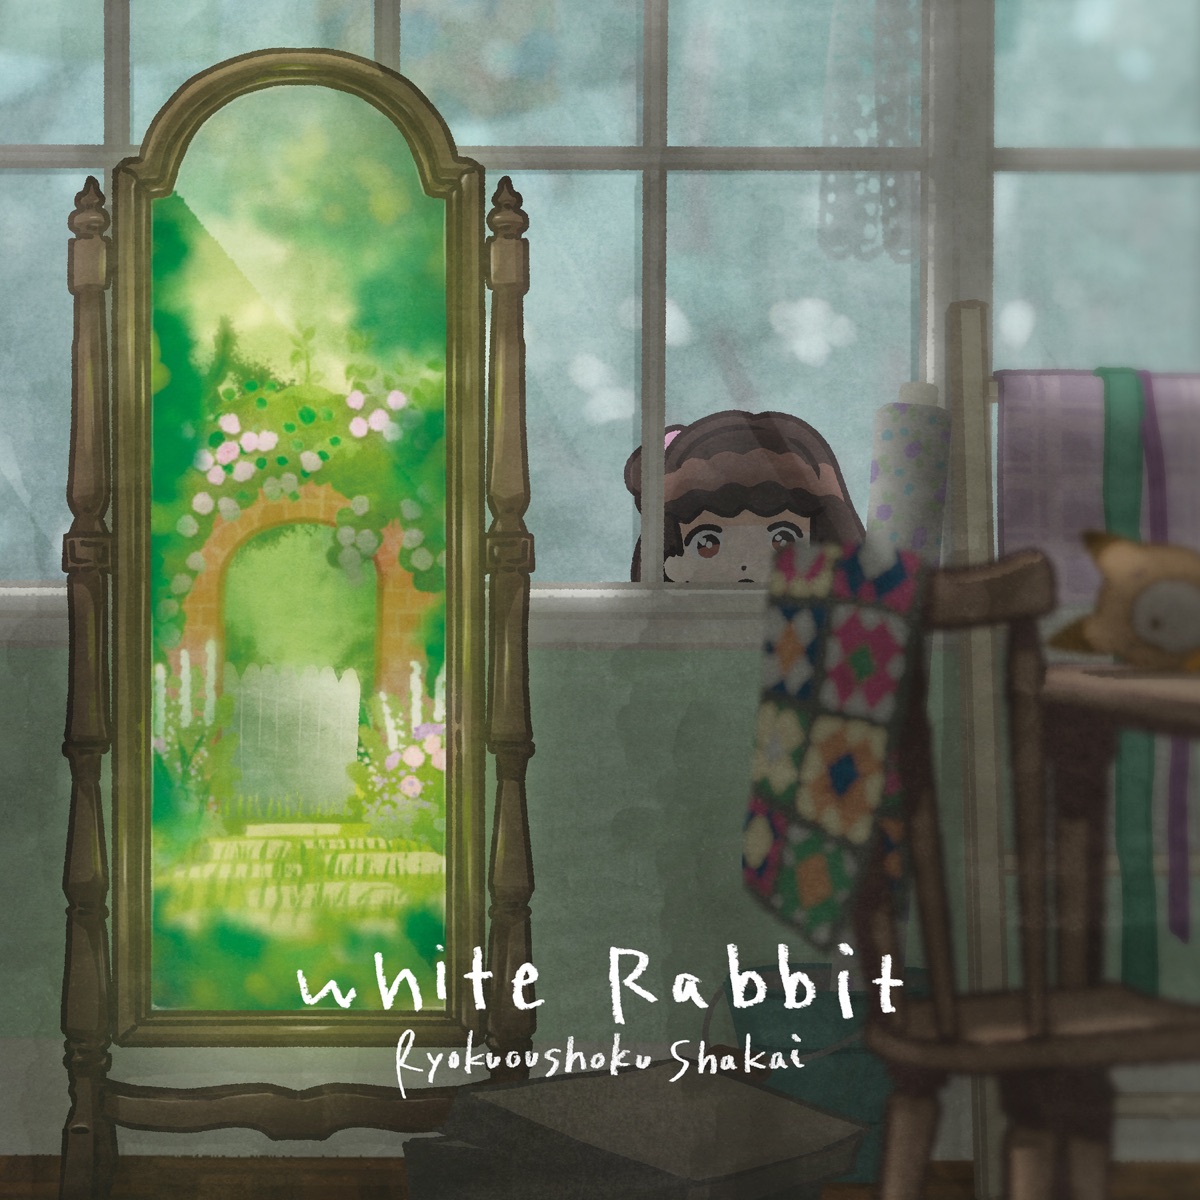 Cover art for『Ryokuoushoku Shakai - White Rabbit』from the release『White Rabbit』